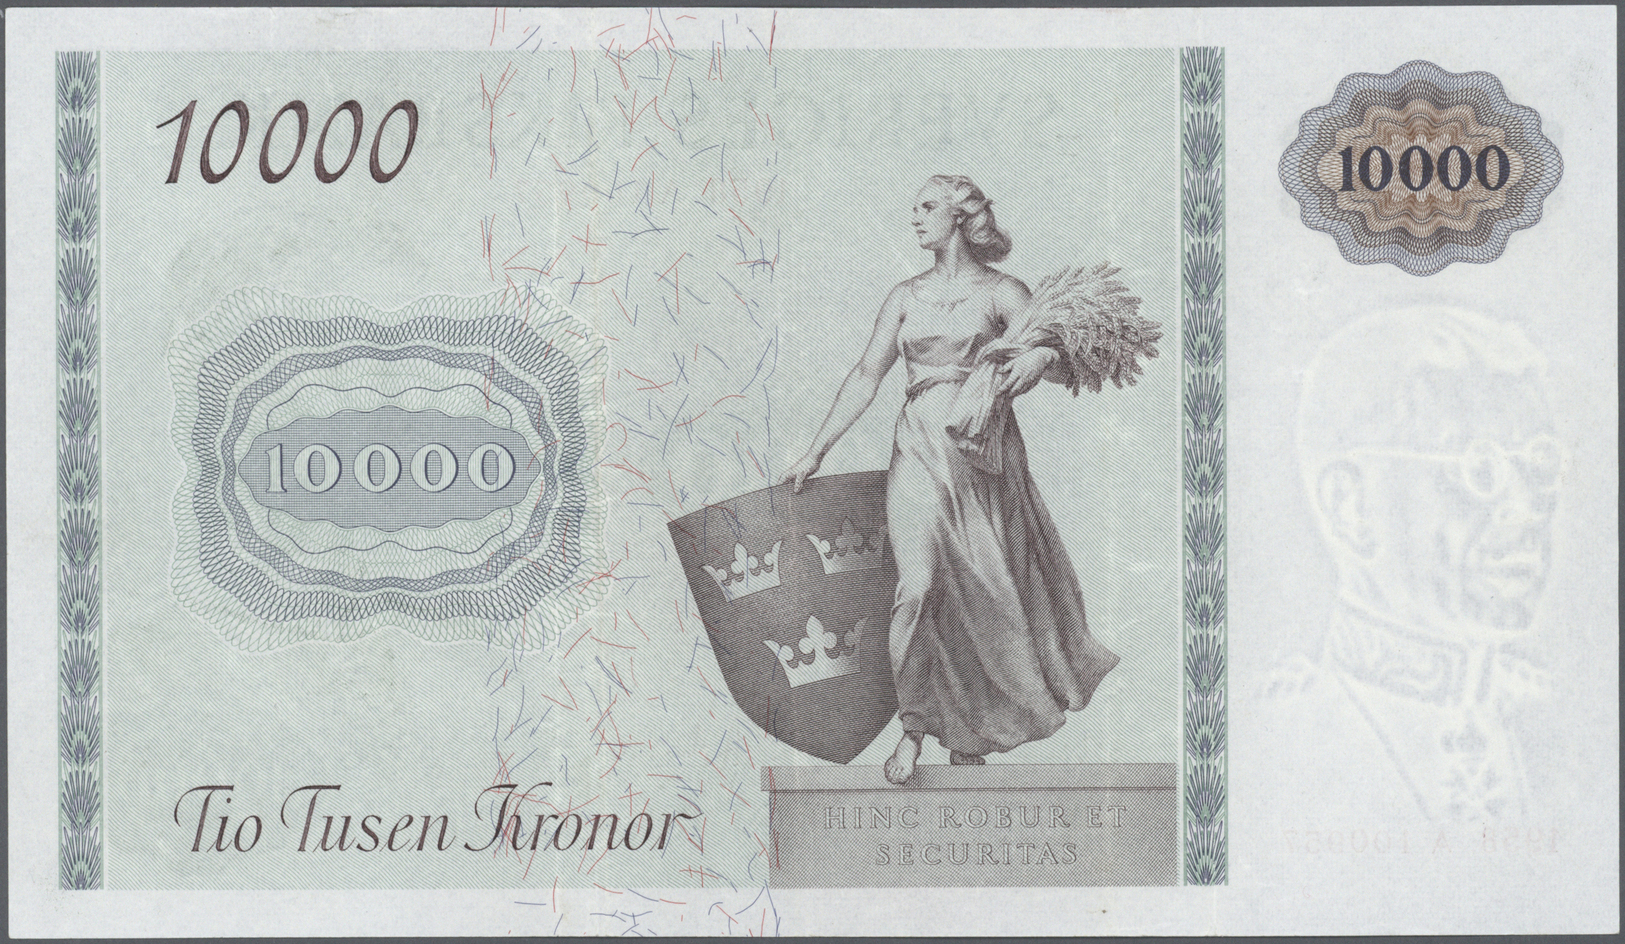 03052 Sweden / Schweden: 10.000 Kronor 1958, P.49, Highly Rare Note In Original Folder And In Excellent Condition, Great - Suède